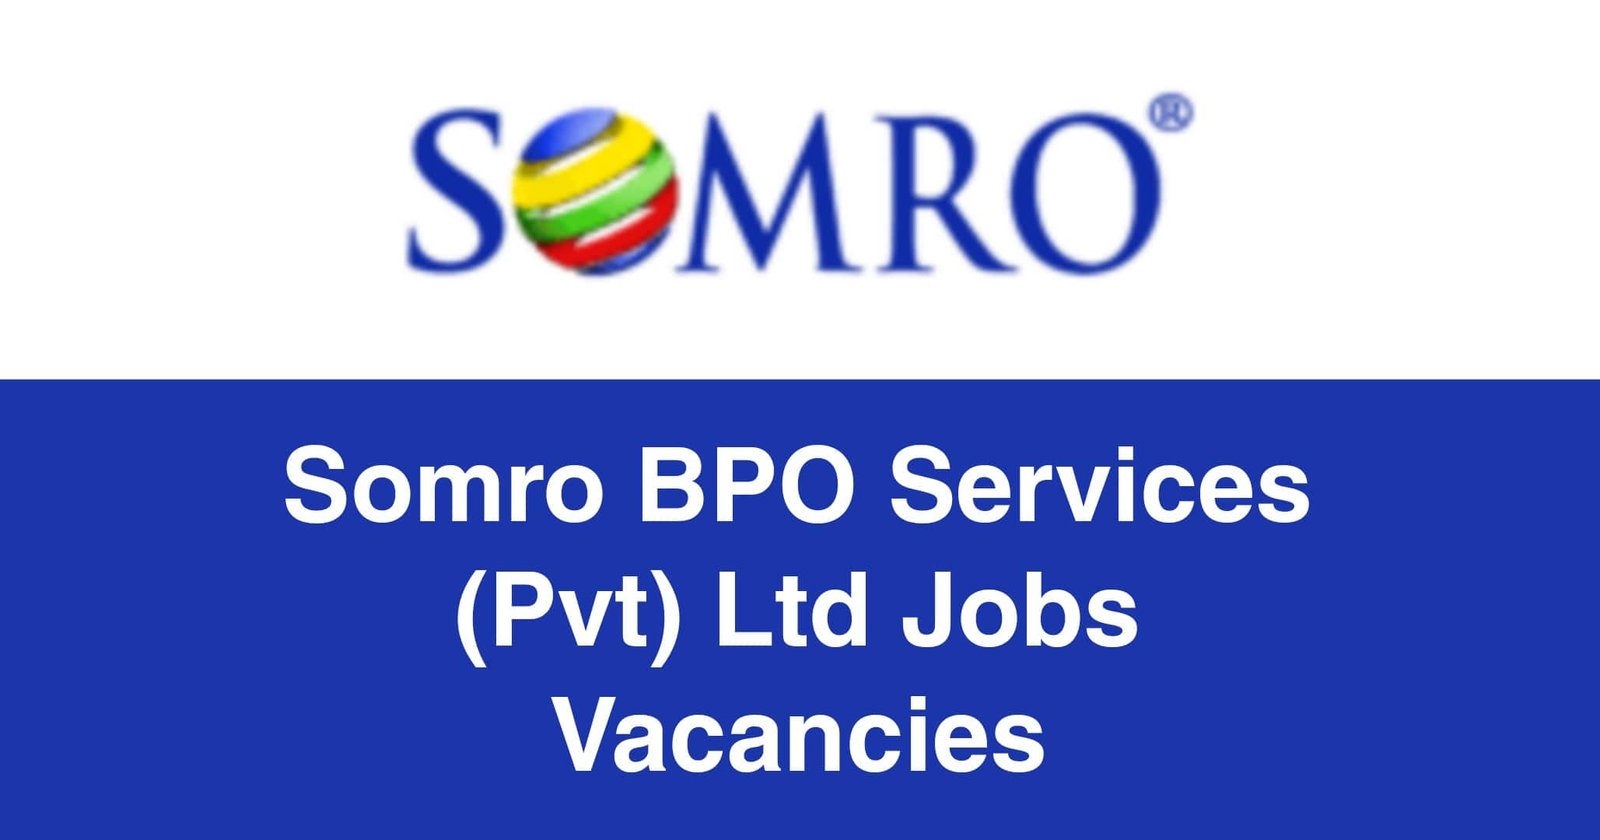 Somro BPO Services (Pvt) Ltd Jobs Vacancies